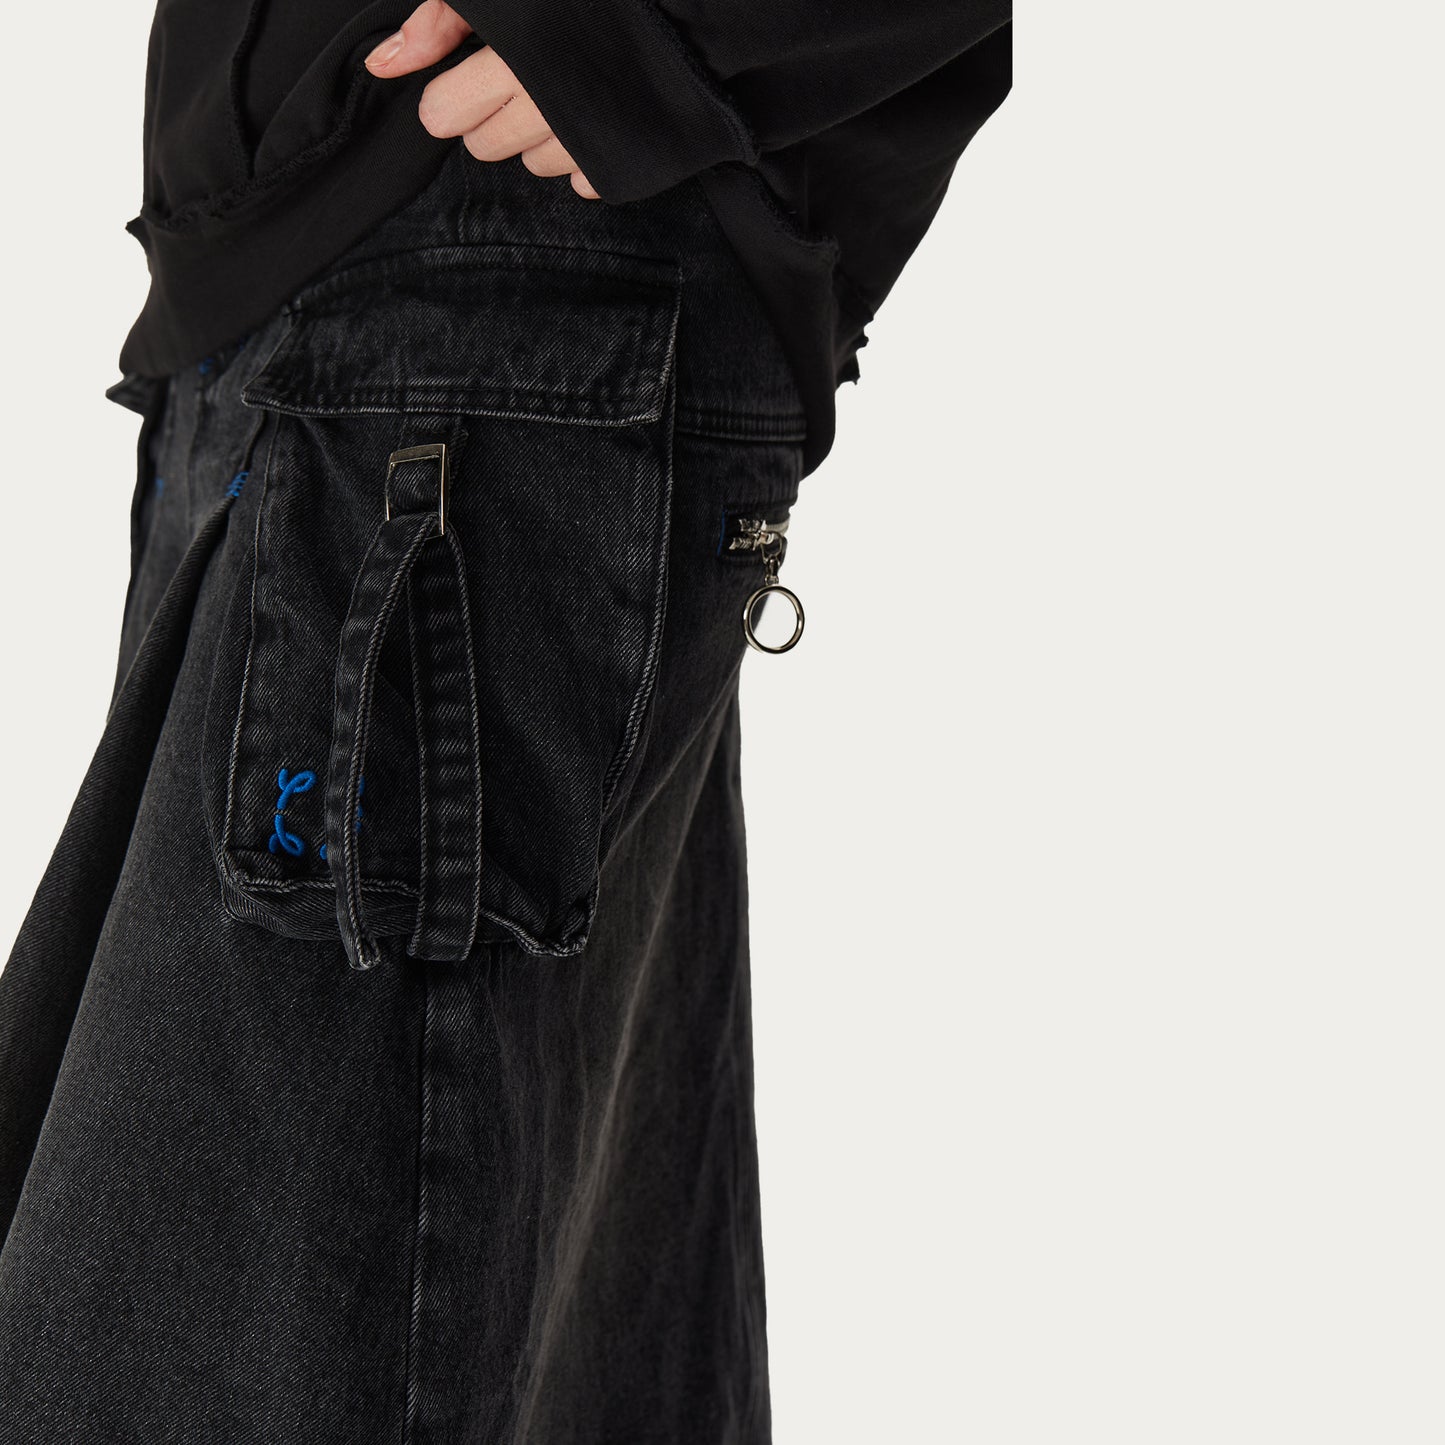 Opal Denim low-rise skirt in Black